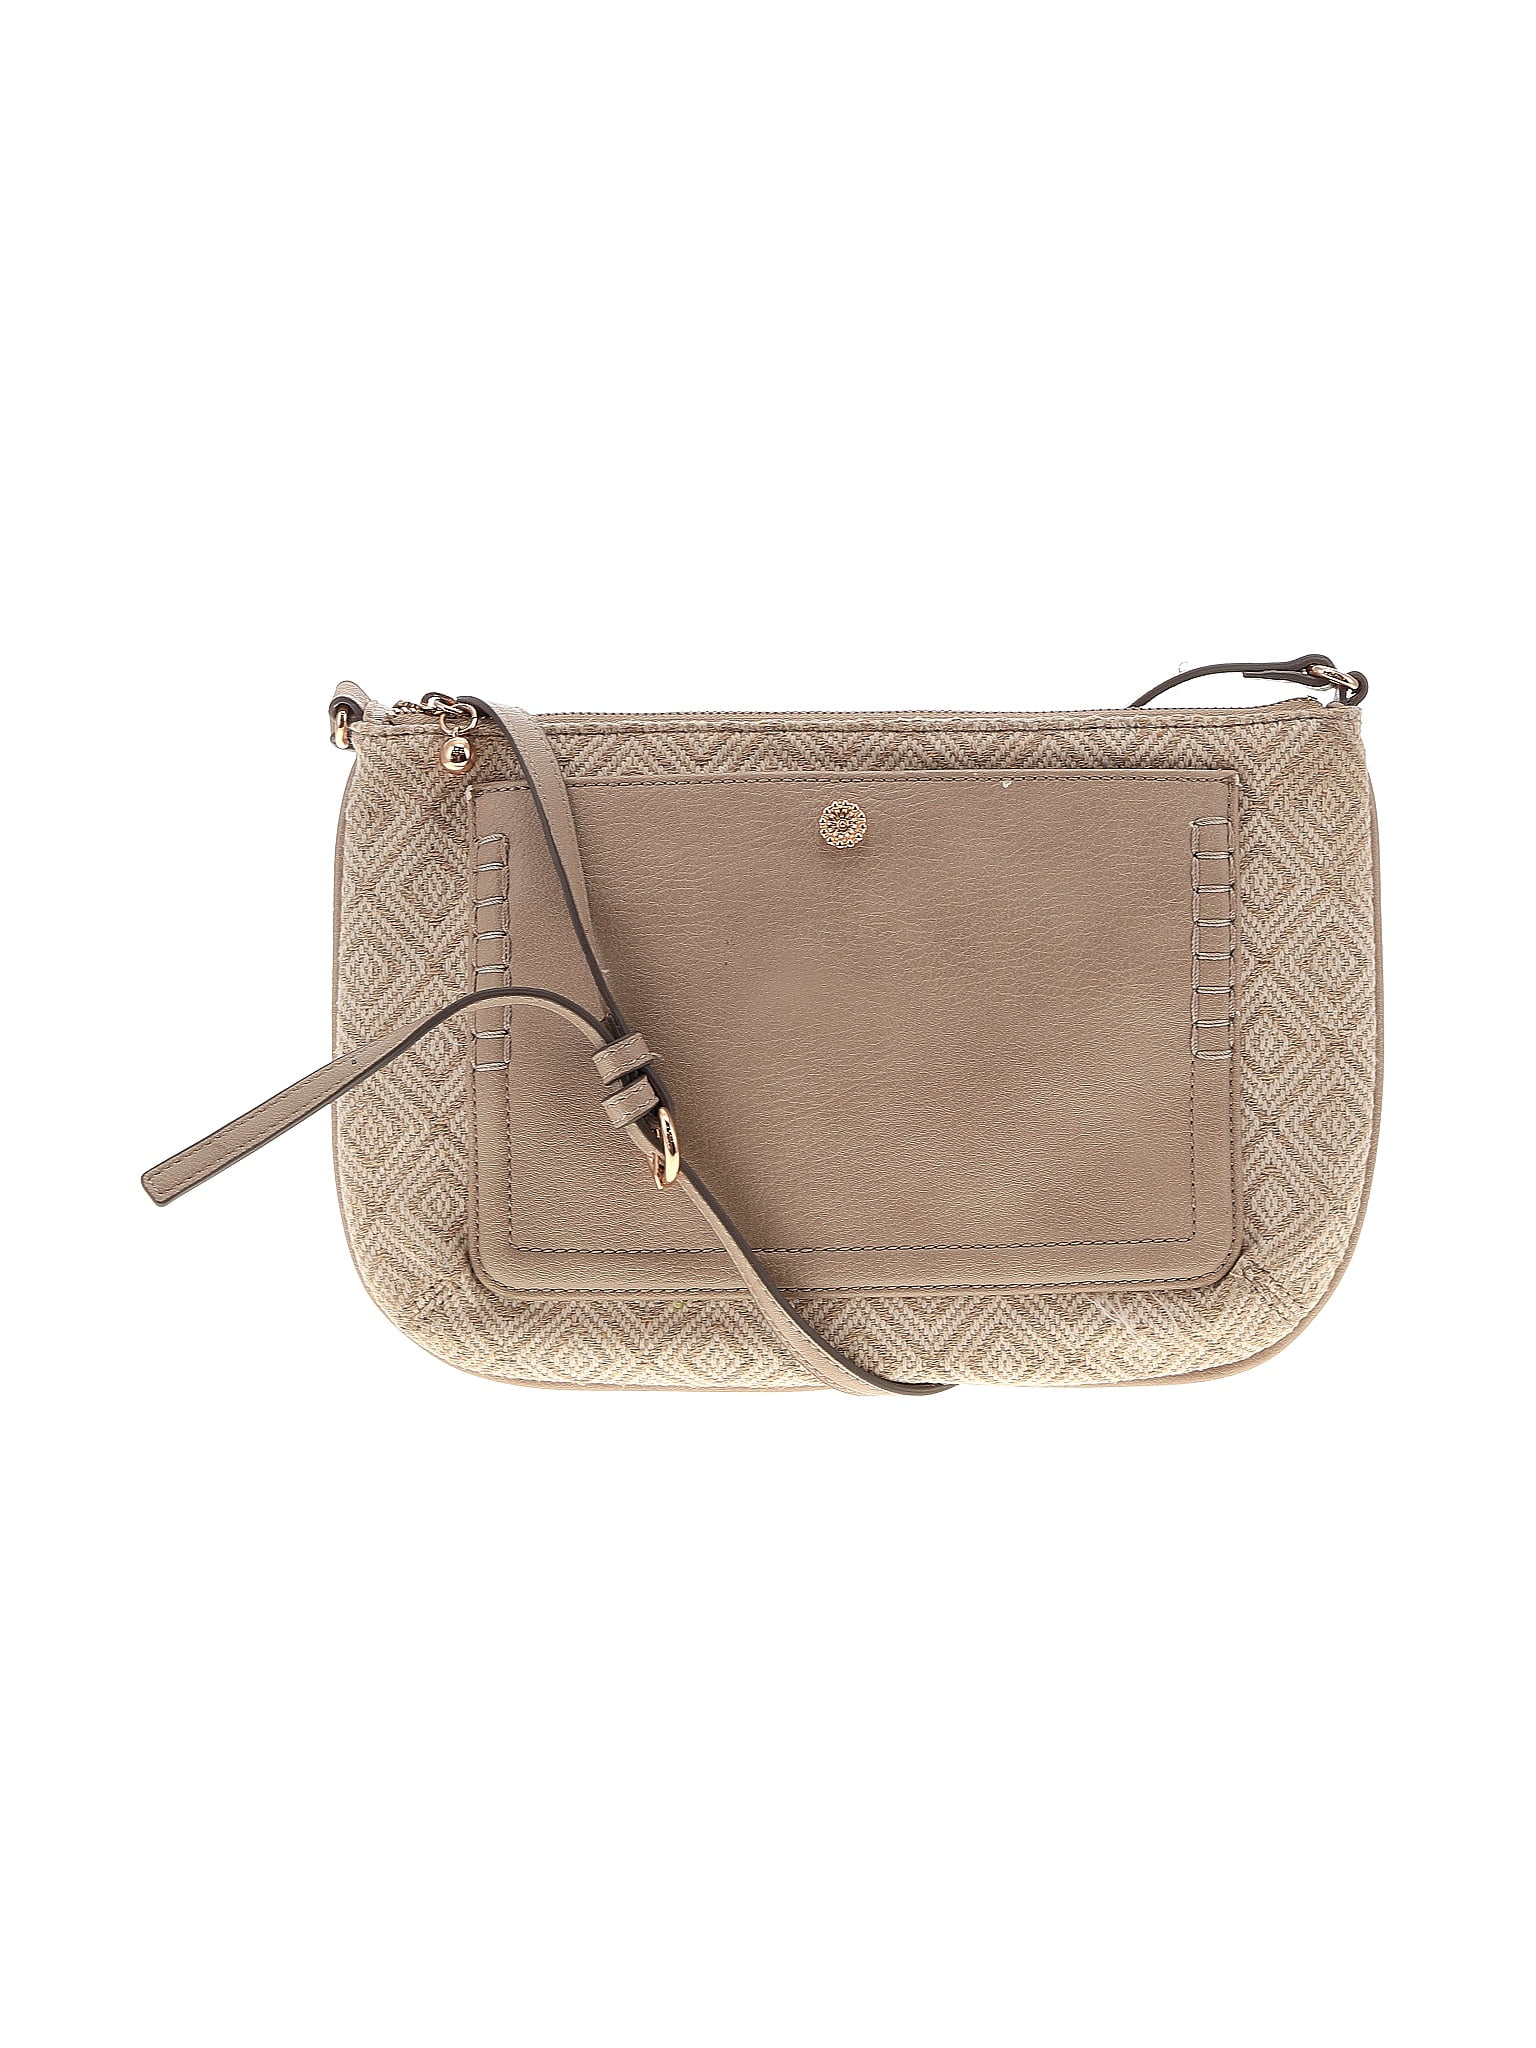 LC Lauren Conrad Bags & Handbags for Women for sale